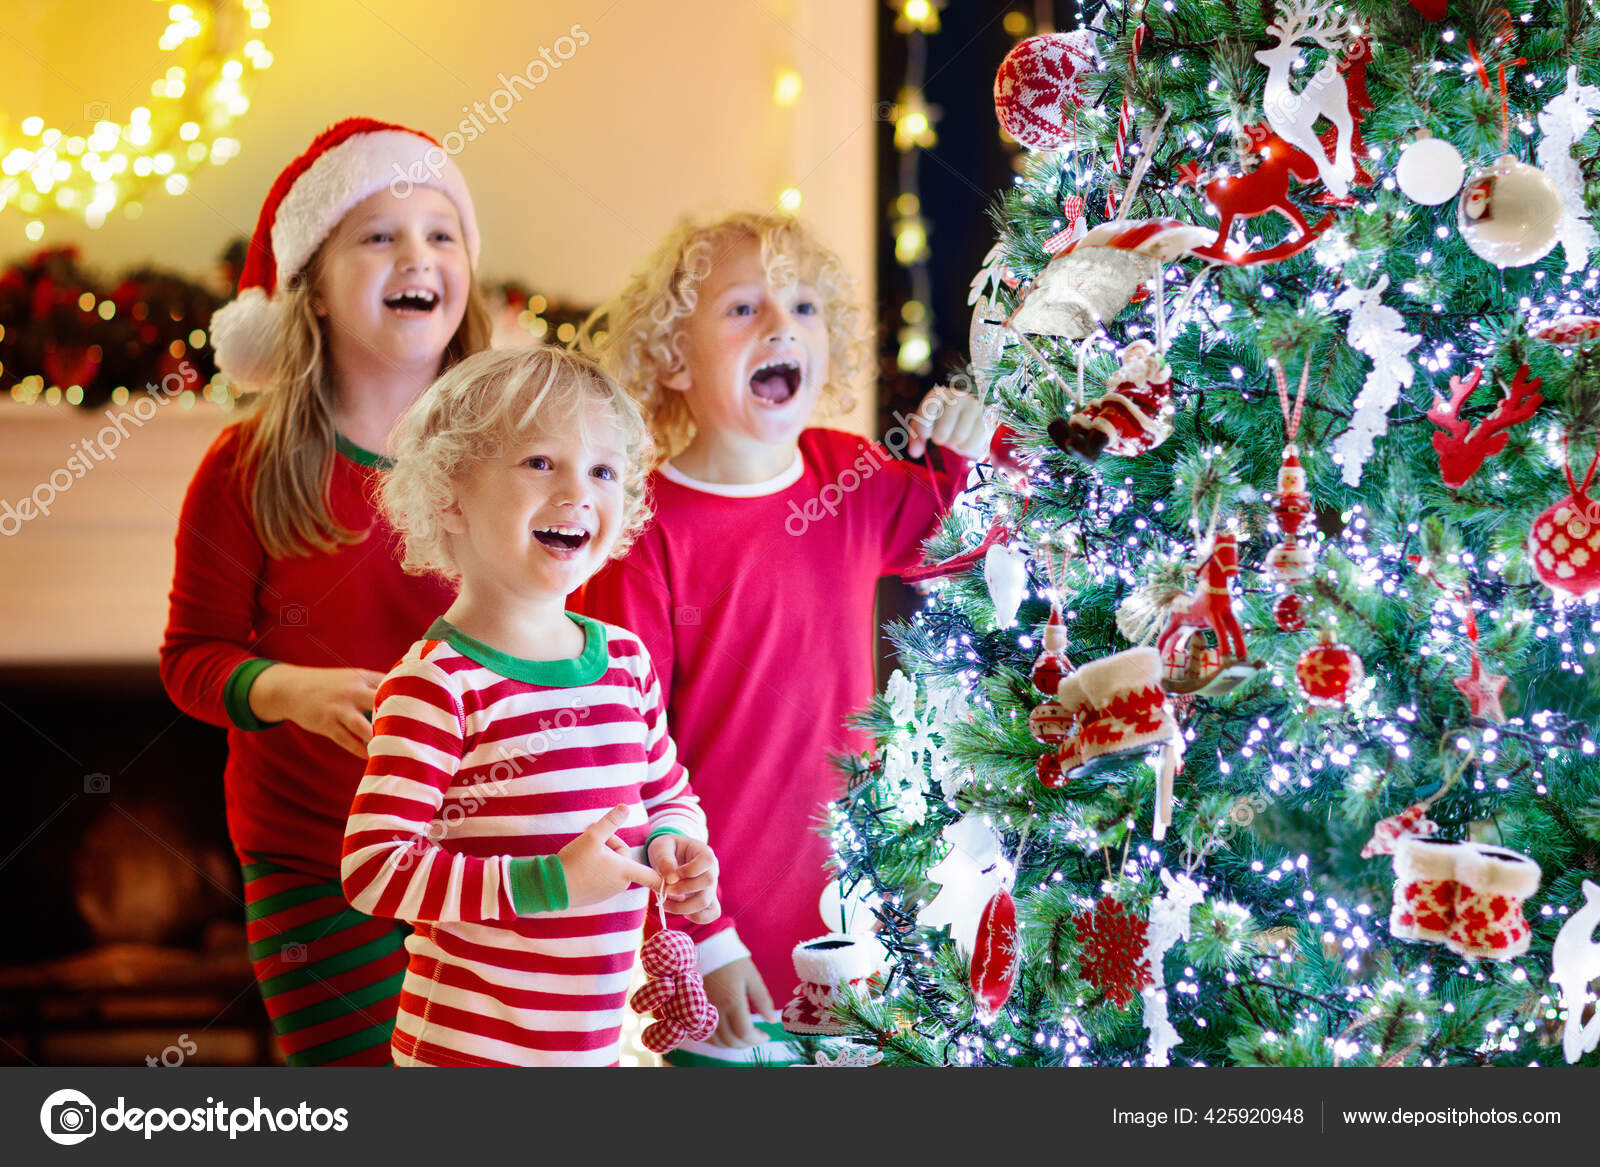   1 Décembre.Bientôt noël . - Page 2 Depositphotos_425920948-stock-photo-child-decorating-christmas-tree-home